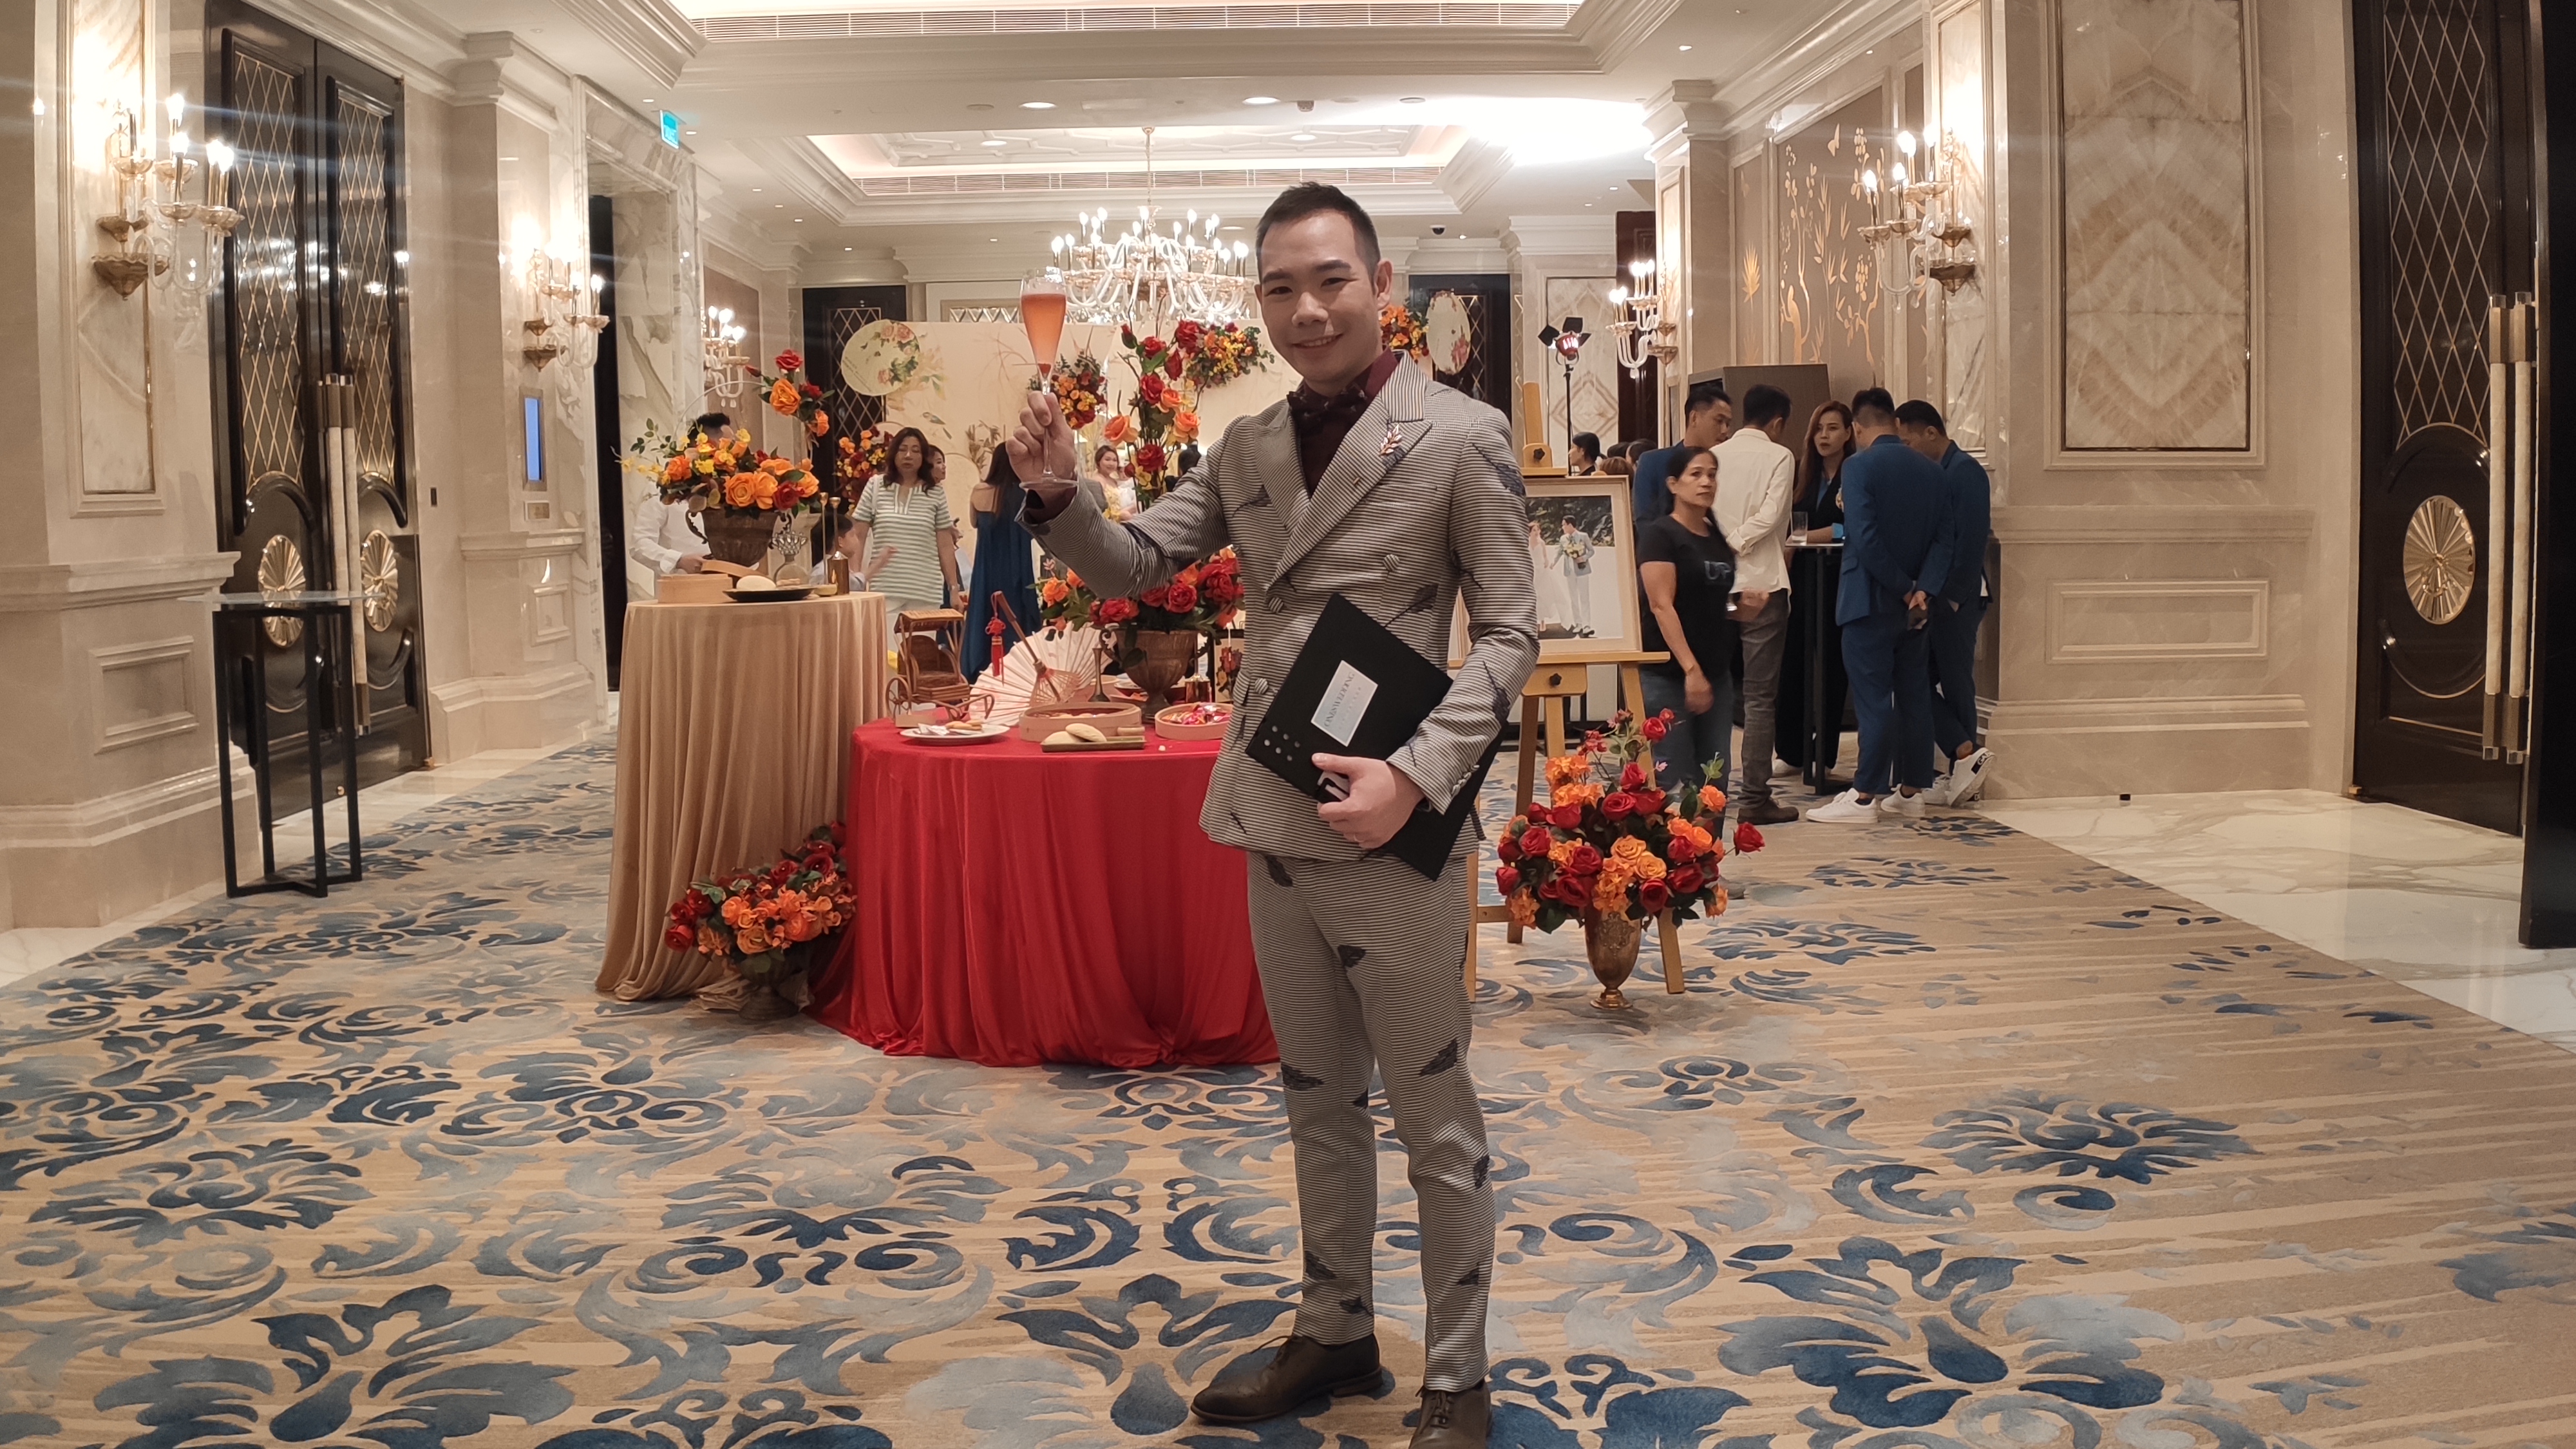  MC Alfred司儀工作紀錄: 20190928 Wedding MC 澳門全職婚禮統籌司儀 Alfred @ 澳門麗思卡爾頓酒店 The Ritz-Carlton Macau